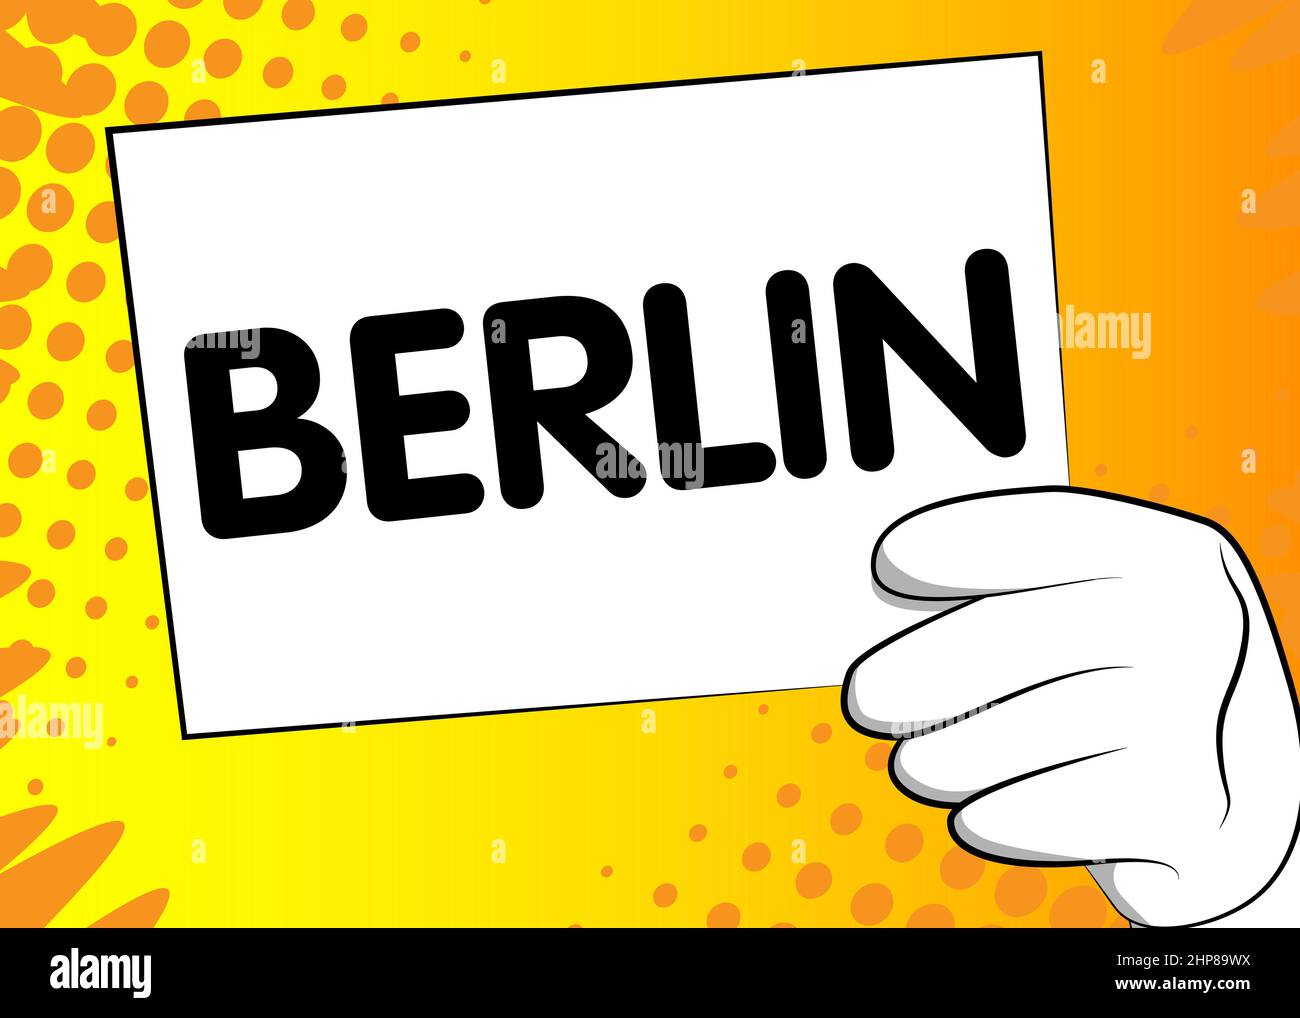 Berlin text, sign. Stock Vector